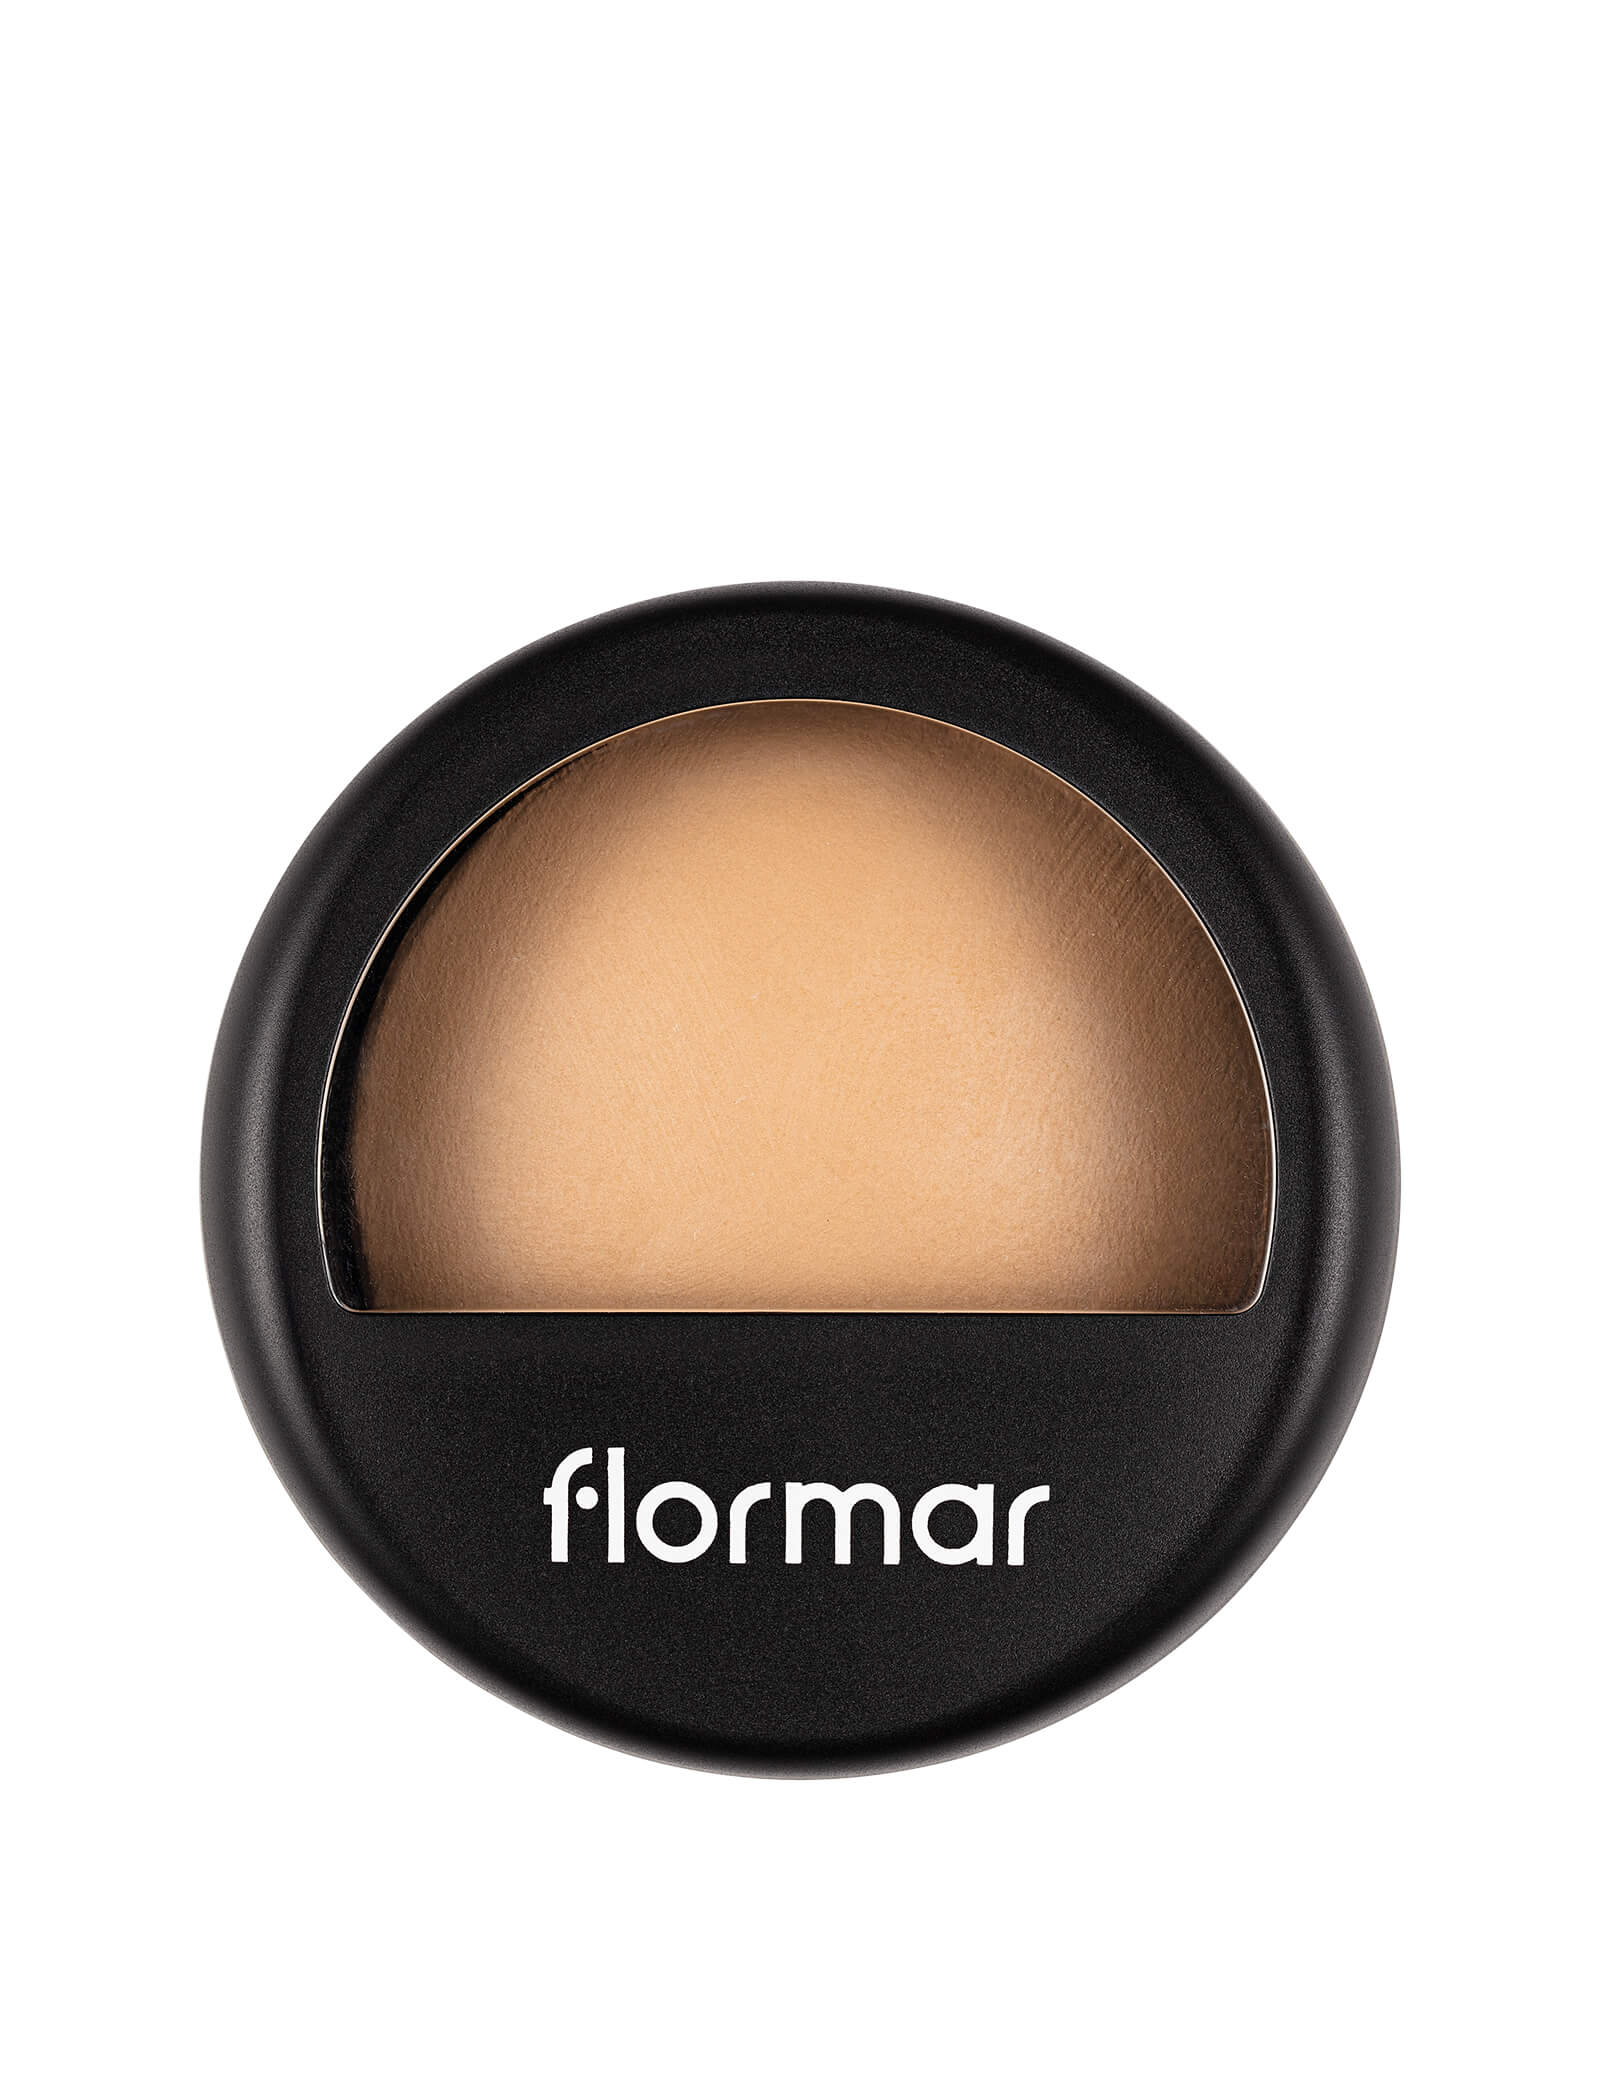 Flormar Baked Powder 020 Soft Beige